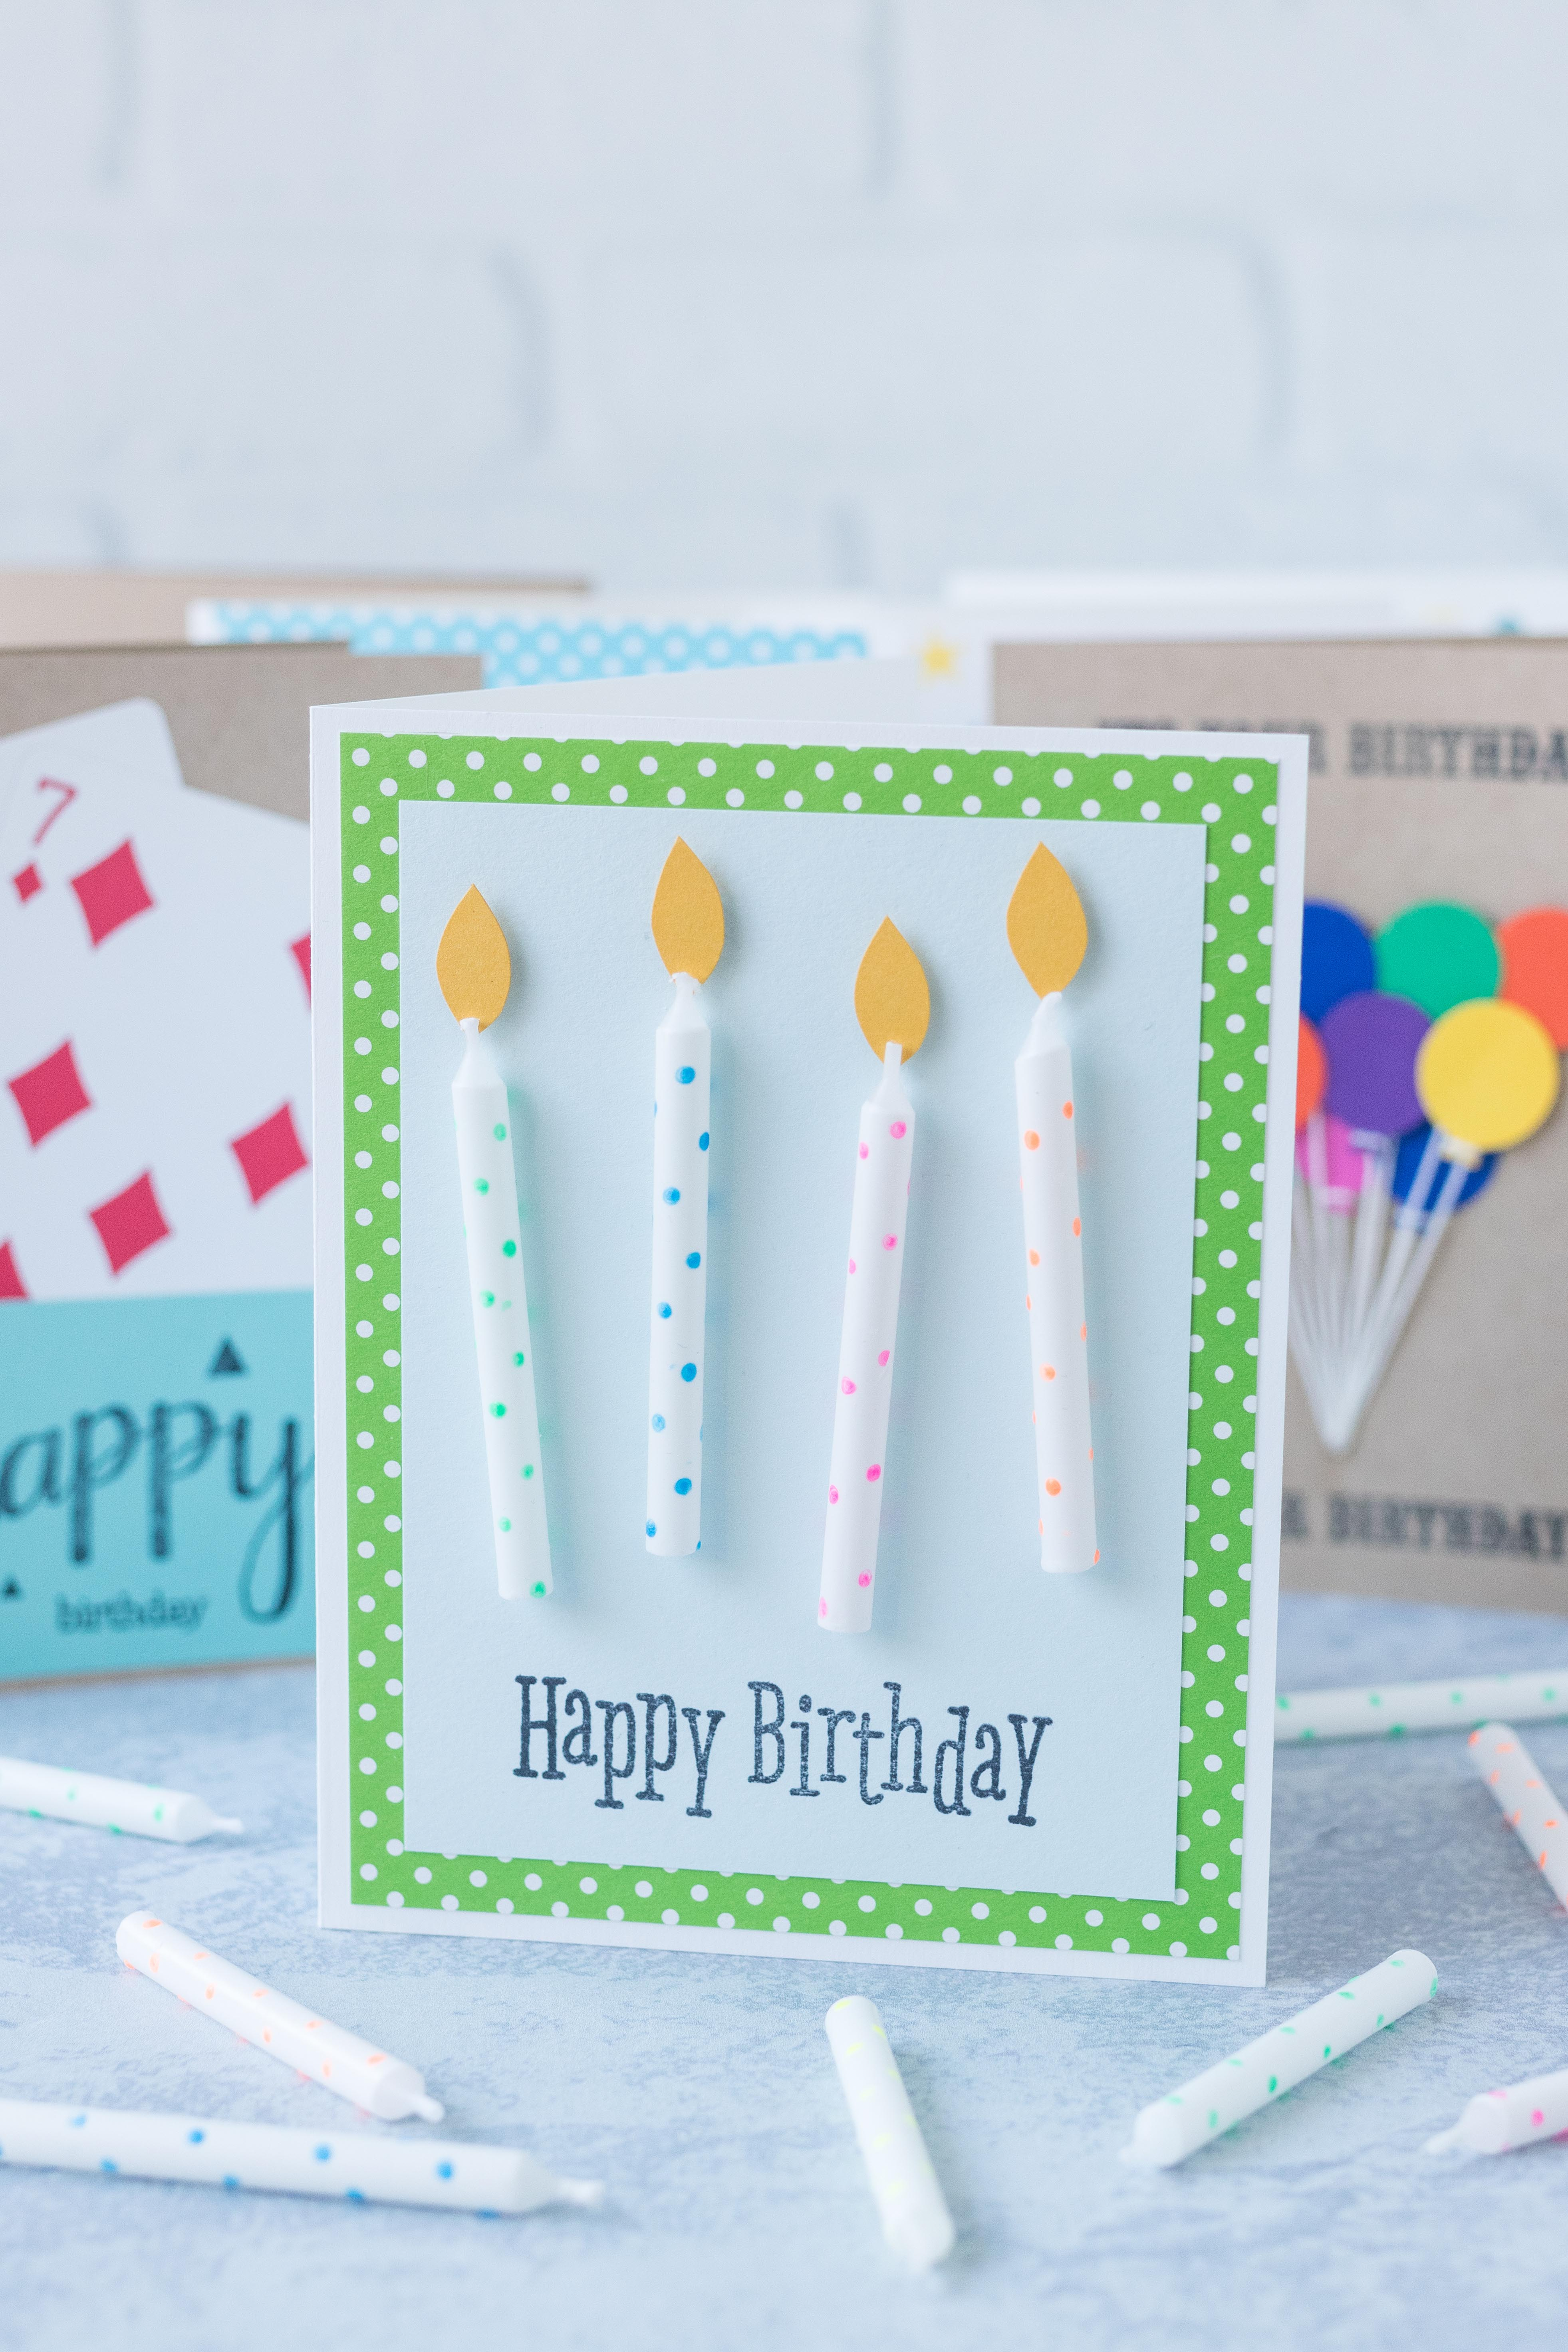 Easy Handmade Birthday Cards Ideas 10 Simple Diy Birthday Cards Rose Clearfield